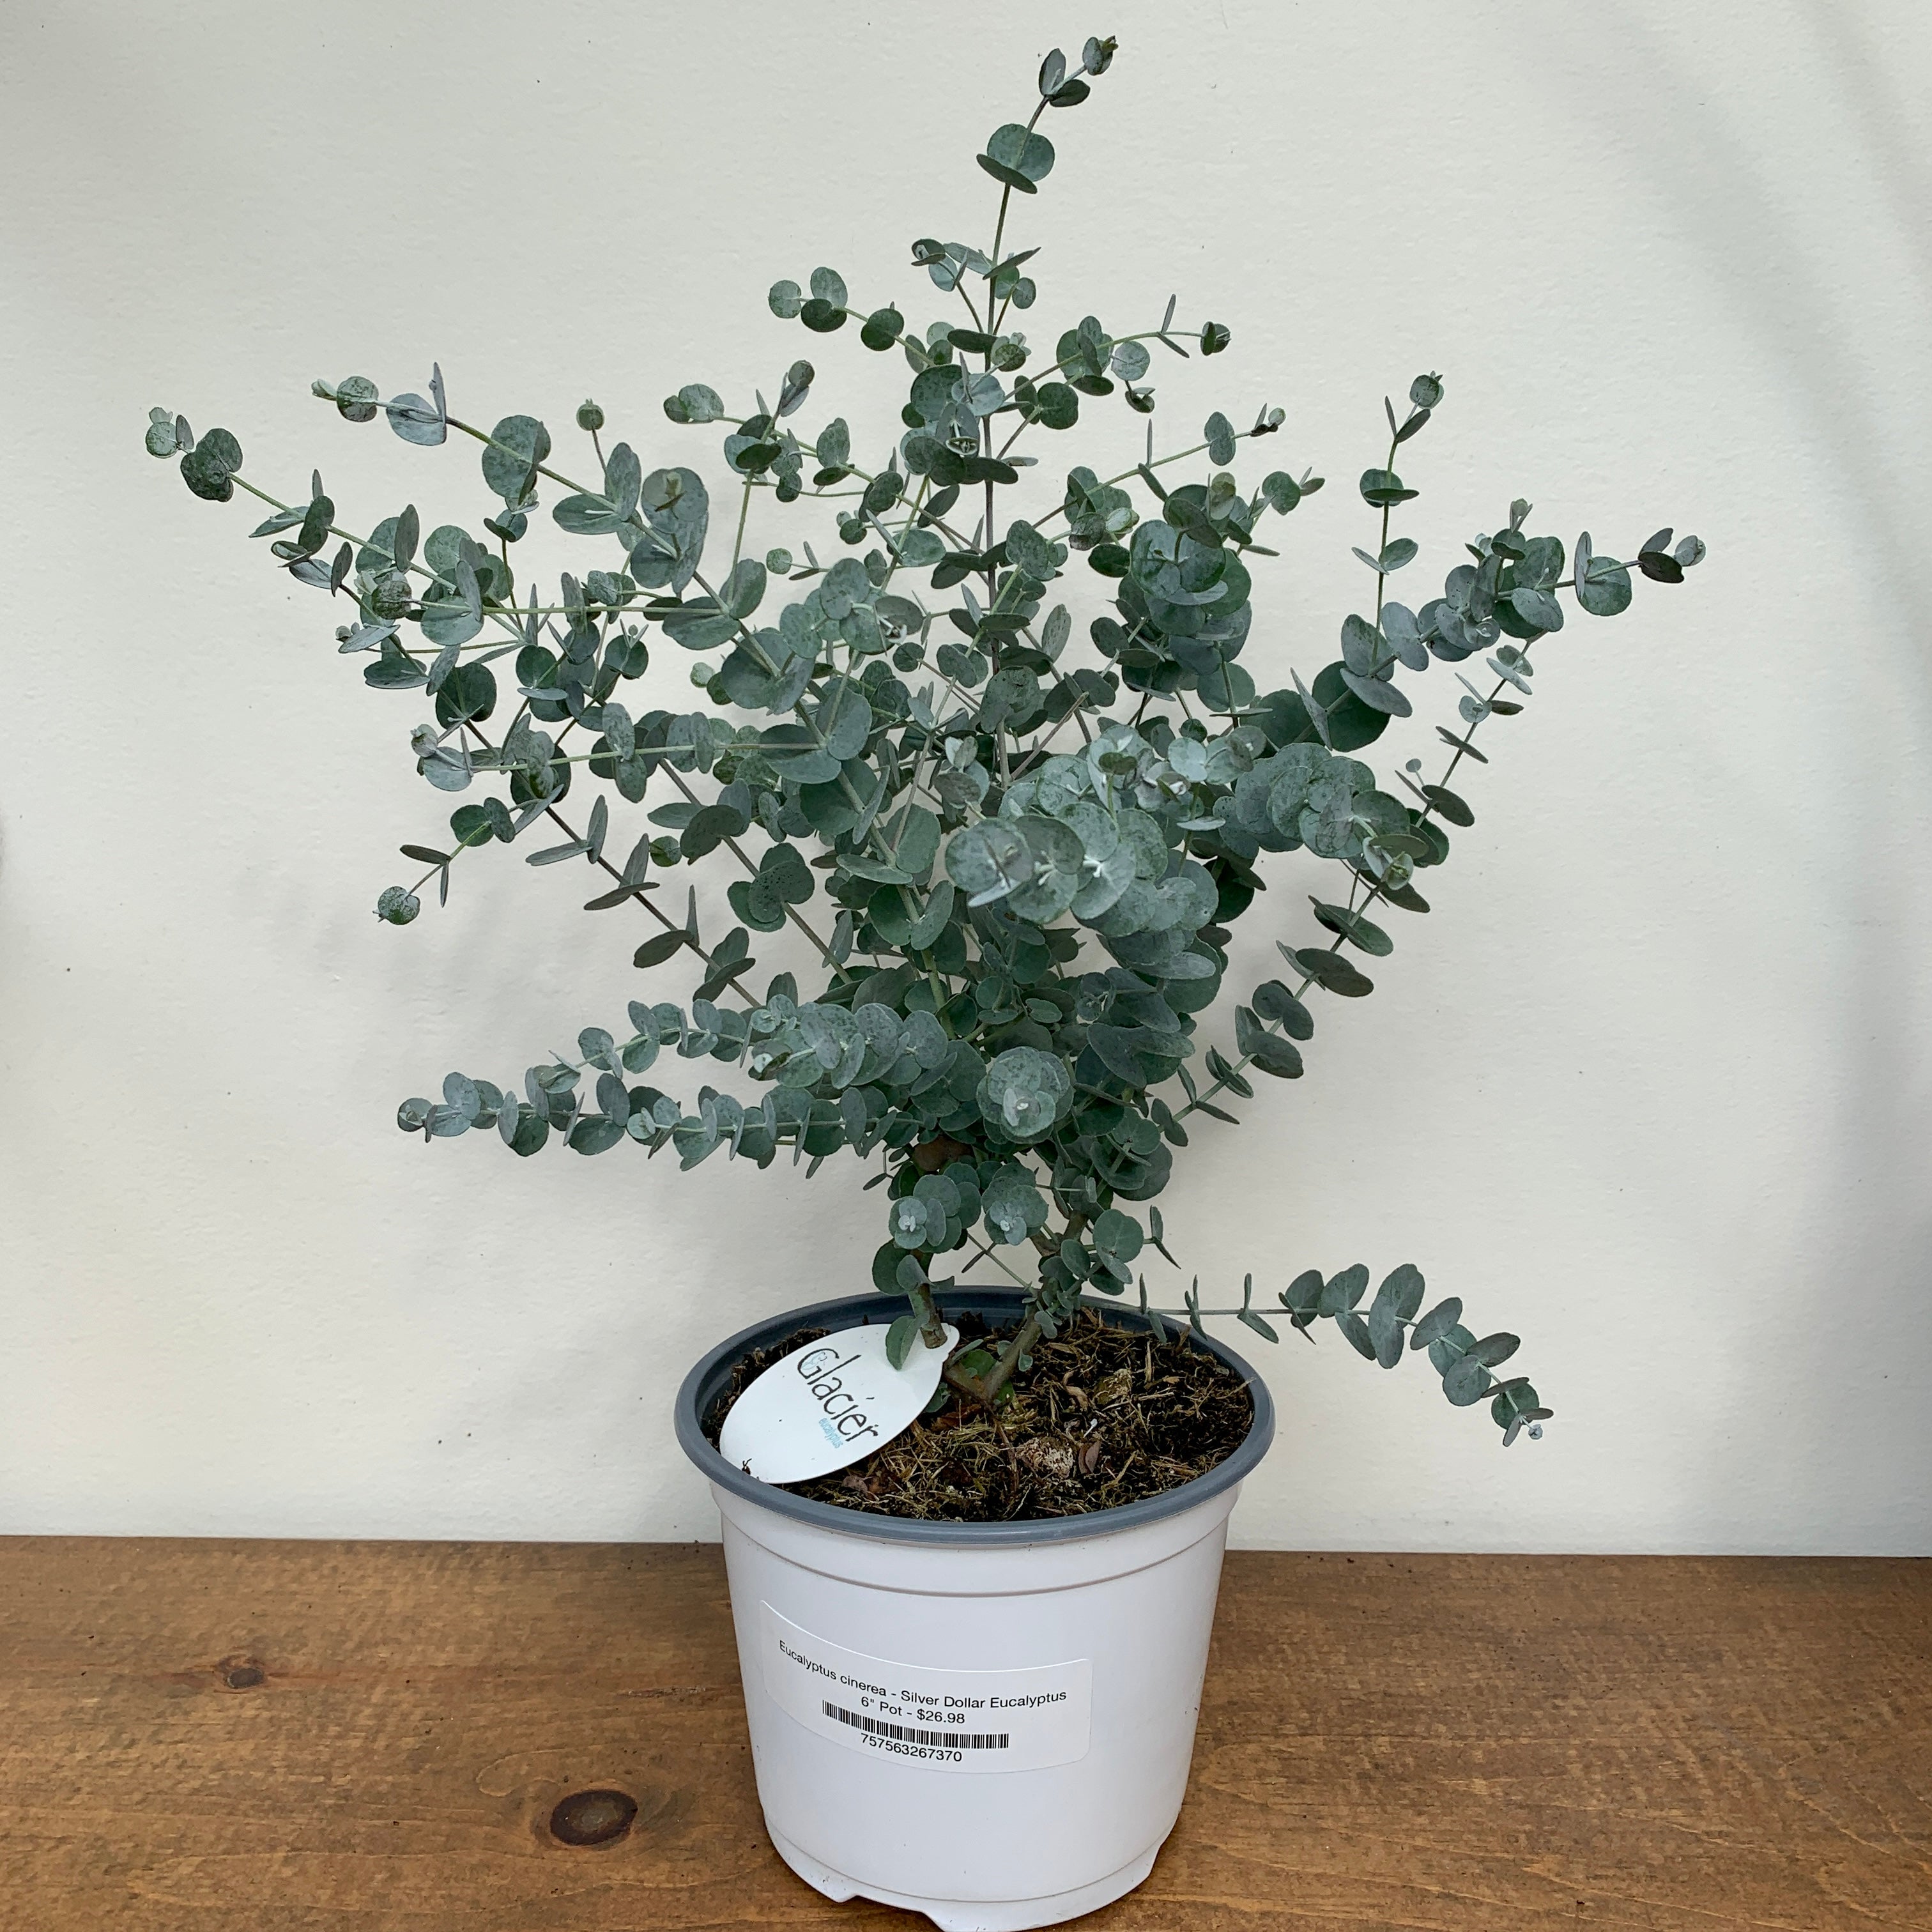 Eucalyptus cinerea - Silver Dollar Eucalyptus